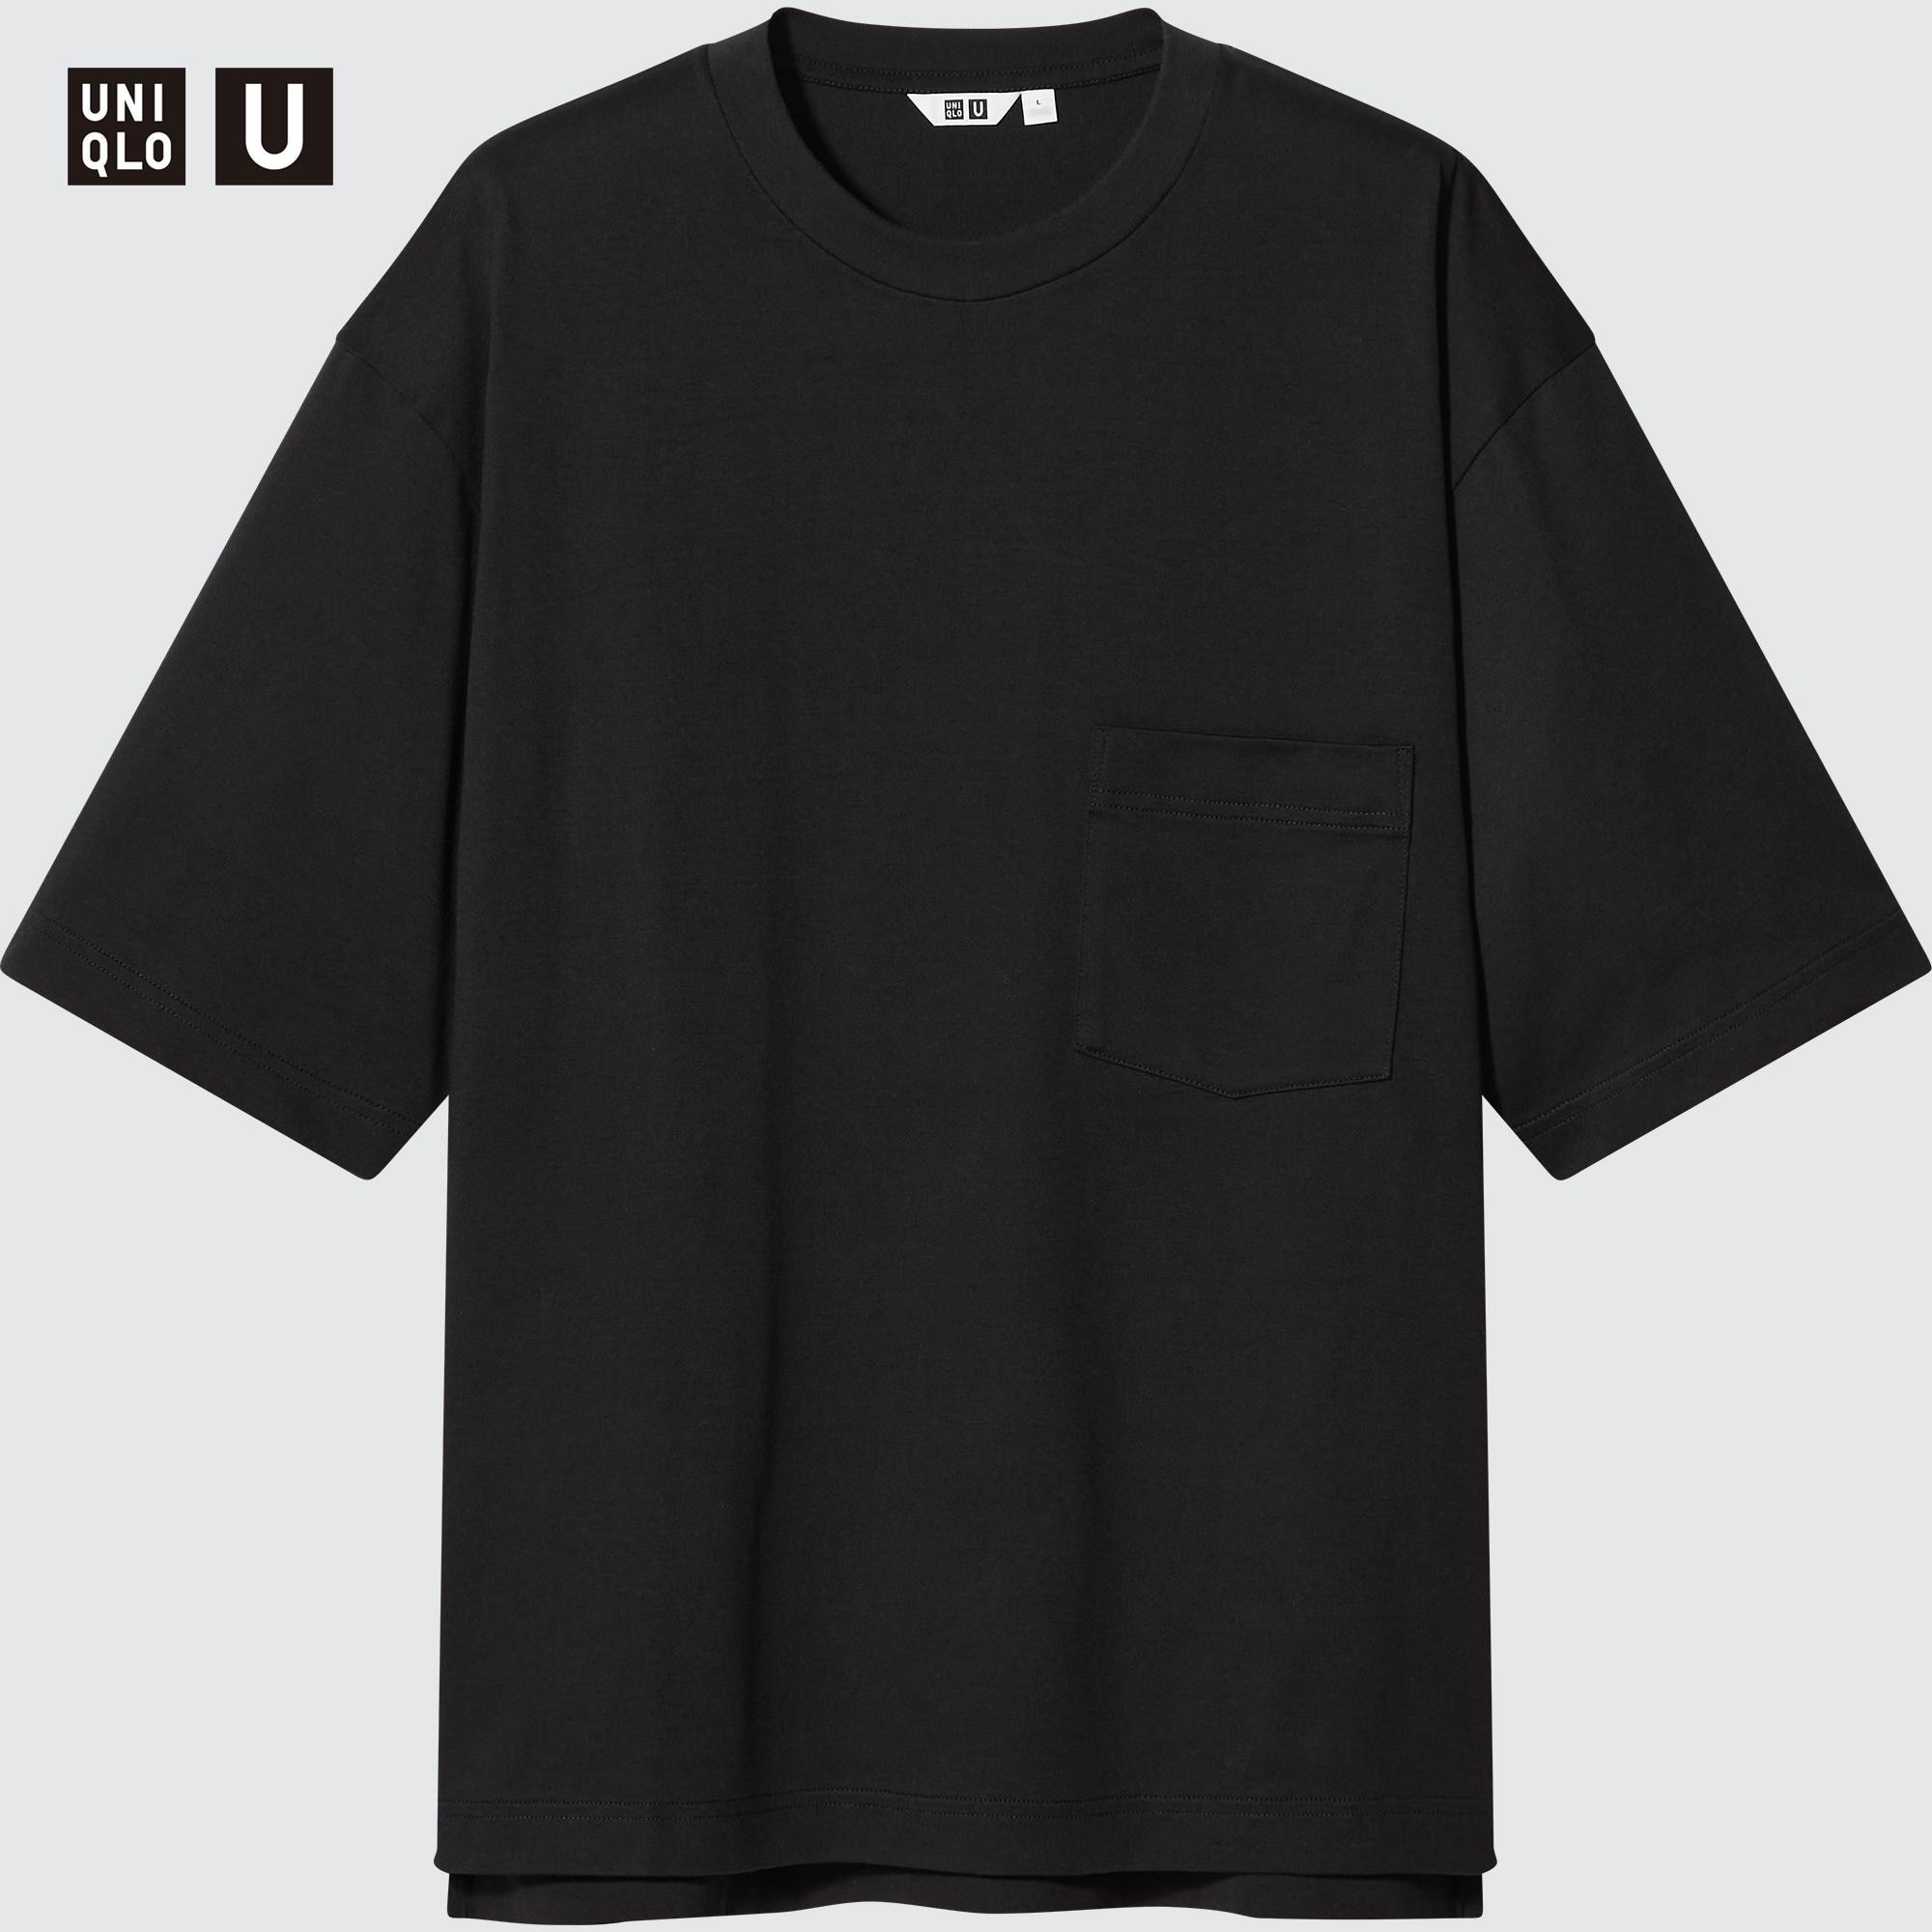 THE BRANDS CAMERA RICOH GR Uniqlo Tshirt Black  Japan Size  NEW  eBay